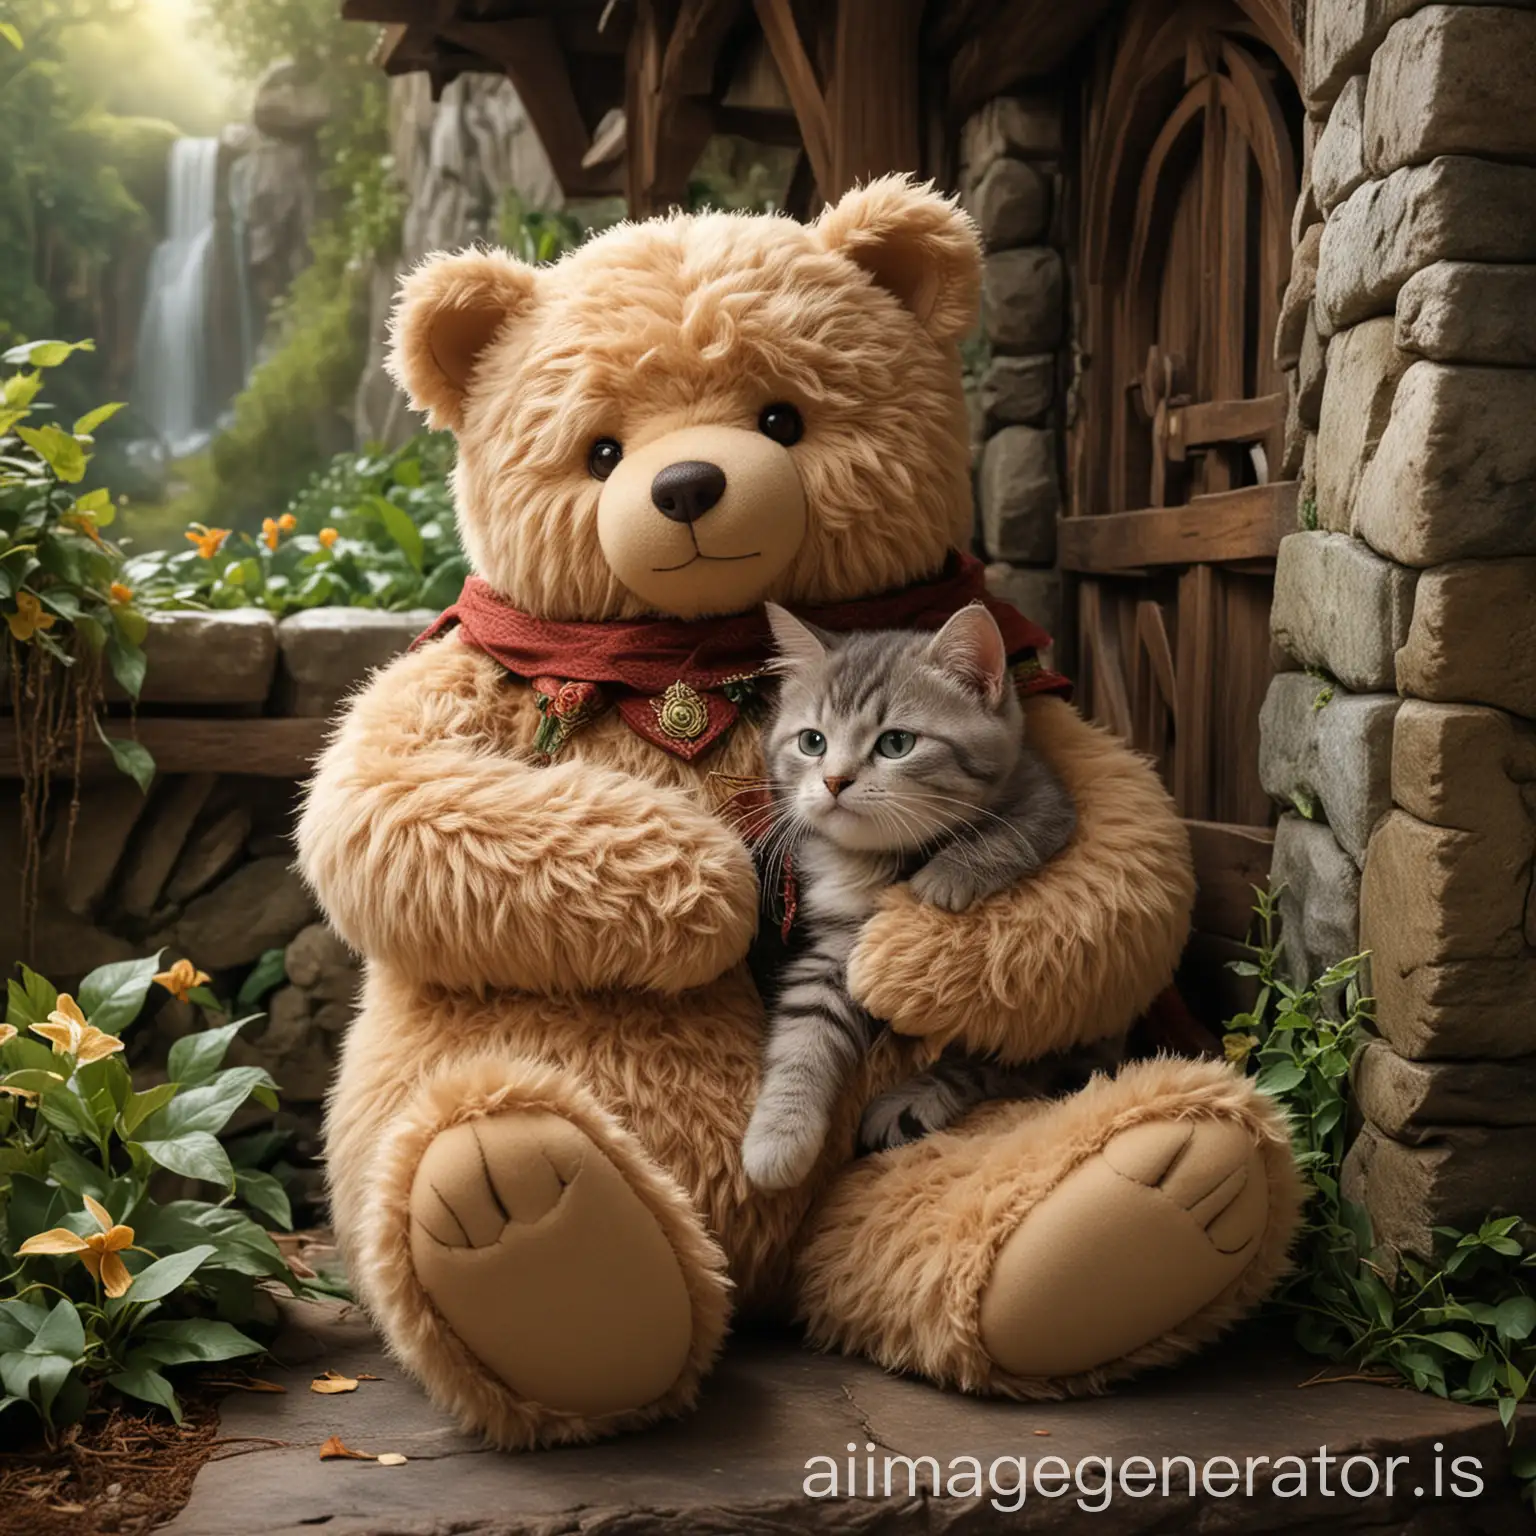 Teddy bear and cat cuddling in Rivendell